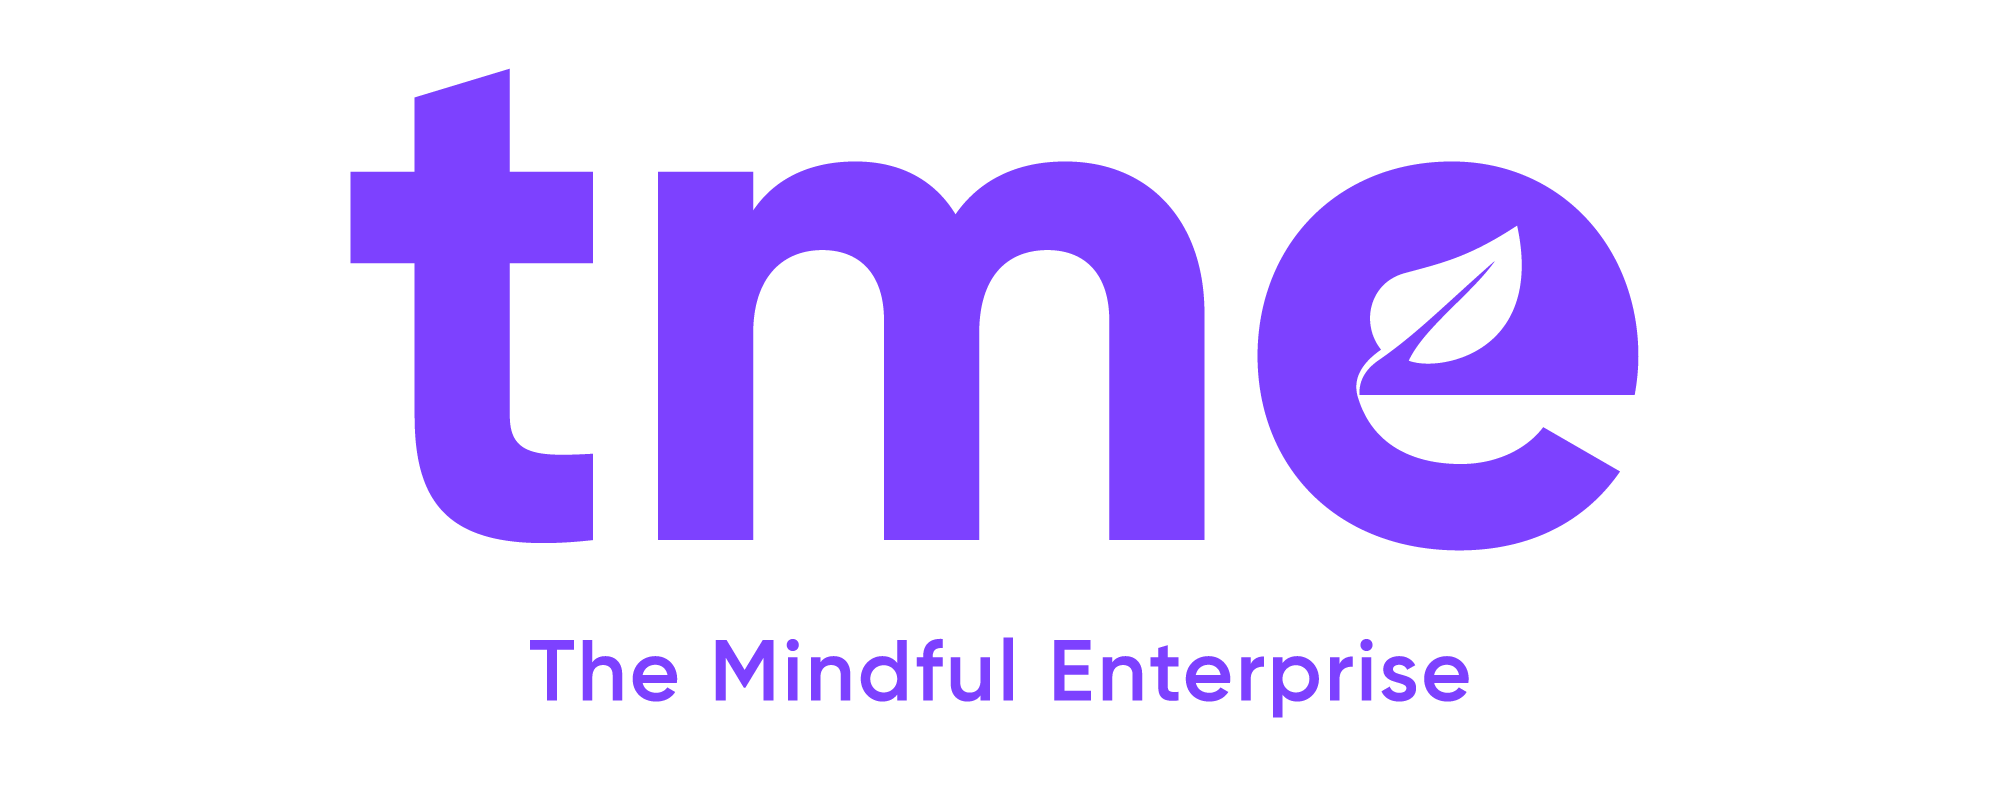 The Mindful Enterprise